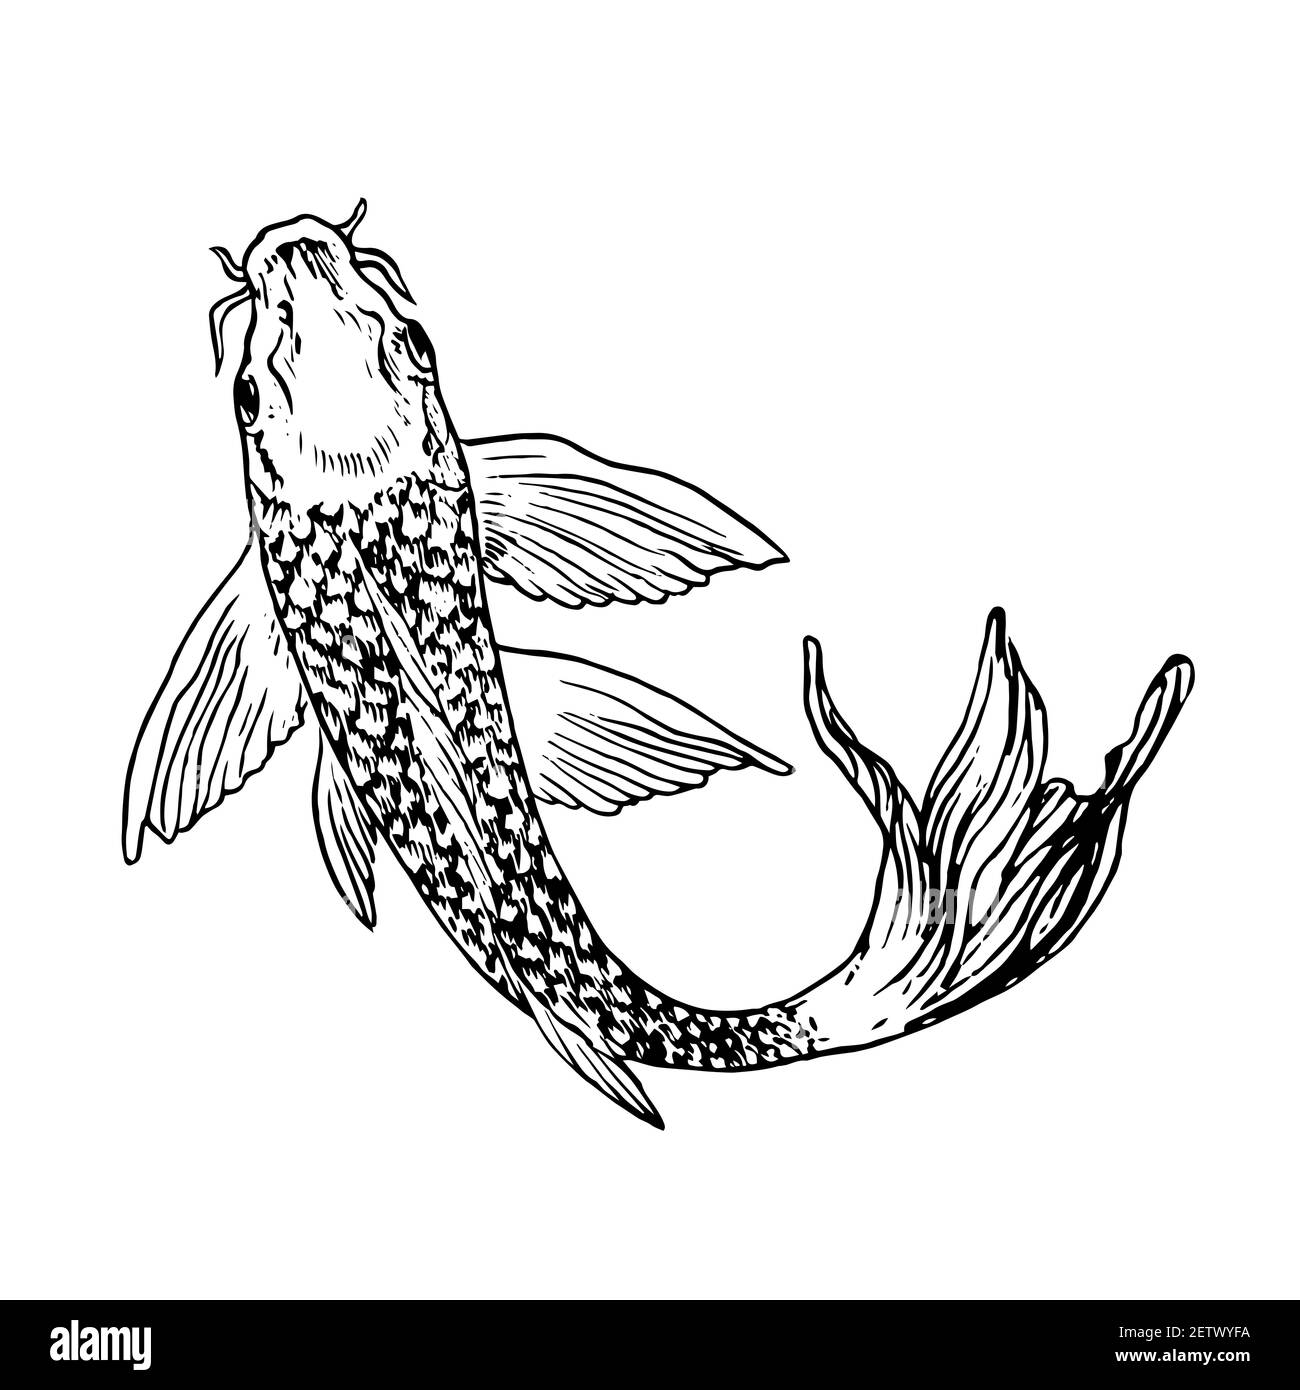 Carp fish, hand drawn doodle black ink drawing, woodcut style Stock Photo -  Alamy